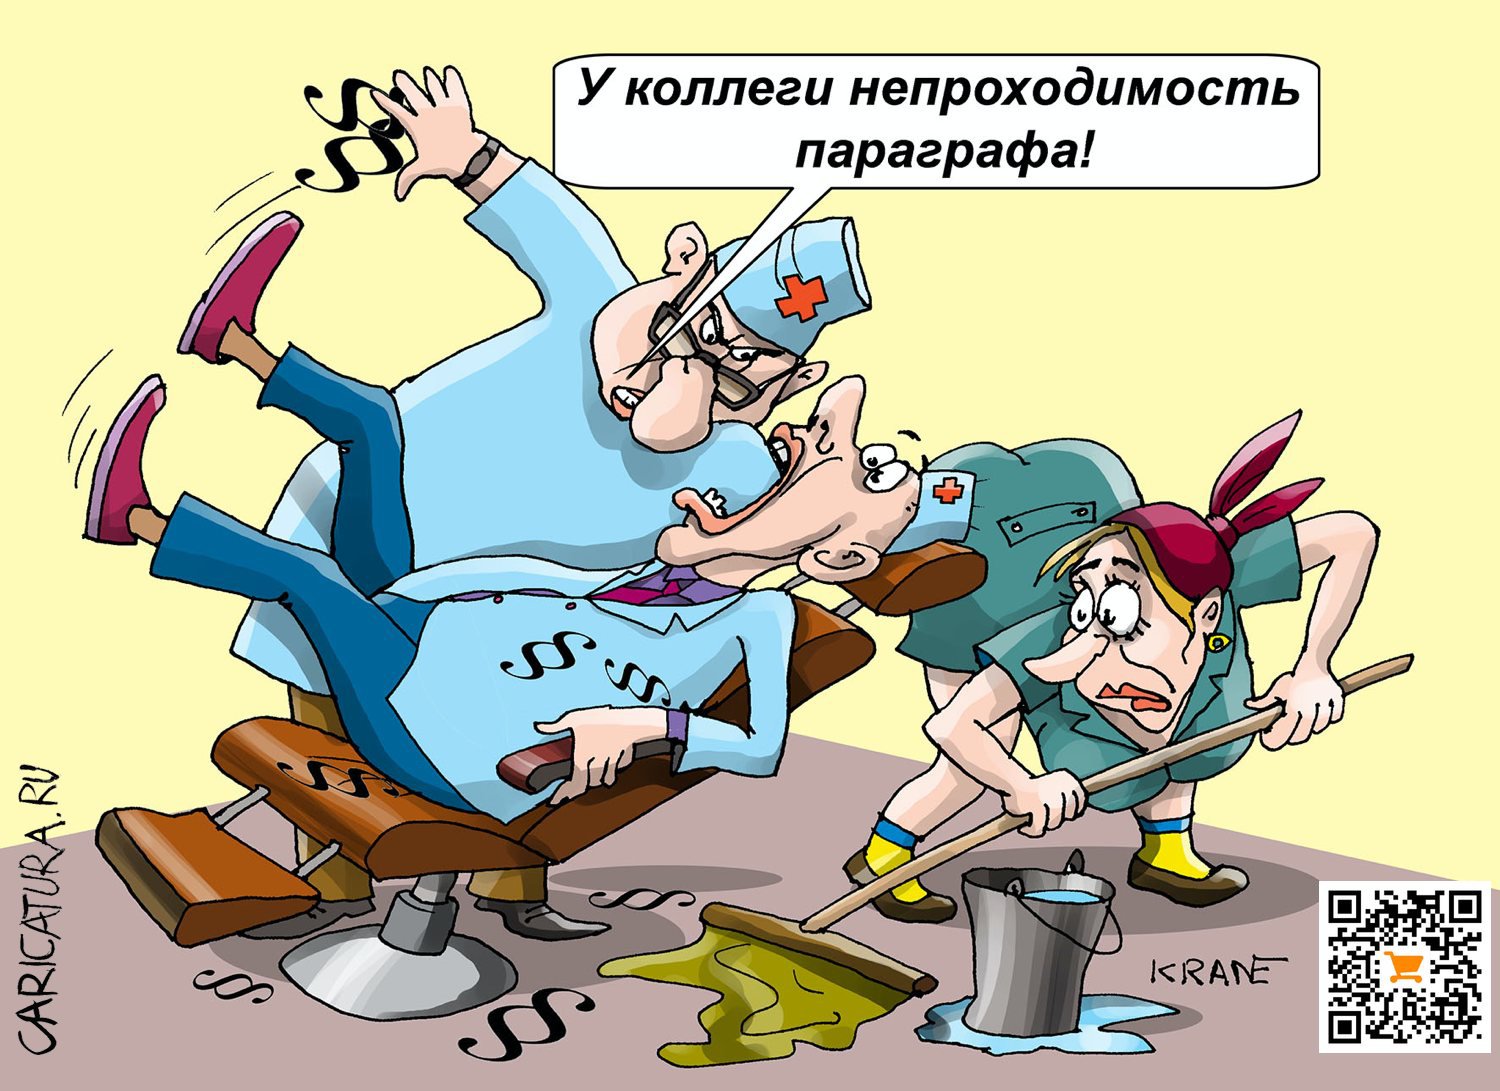 Карикатура "Медицина: приказано выжить", Евгений Кран